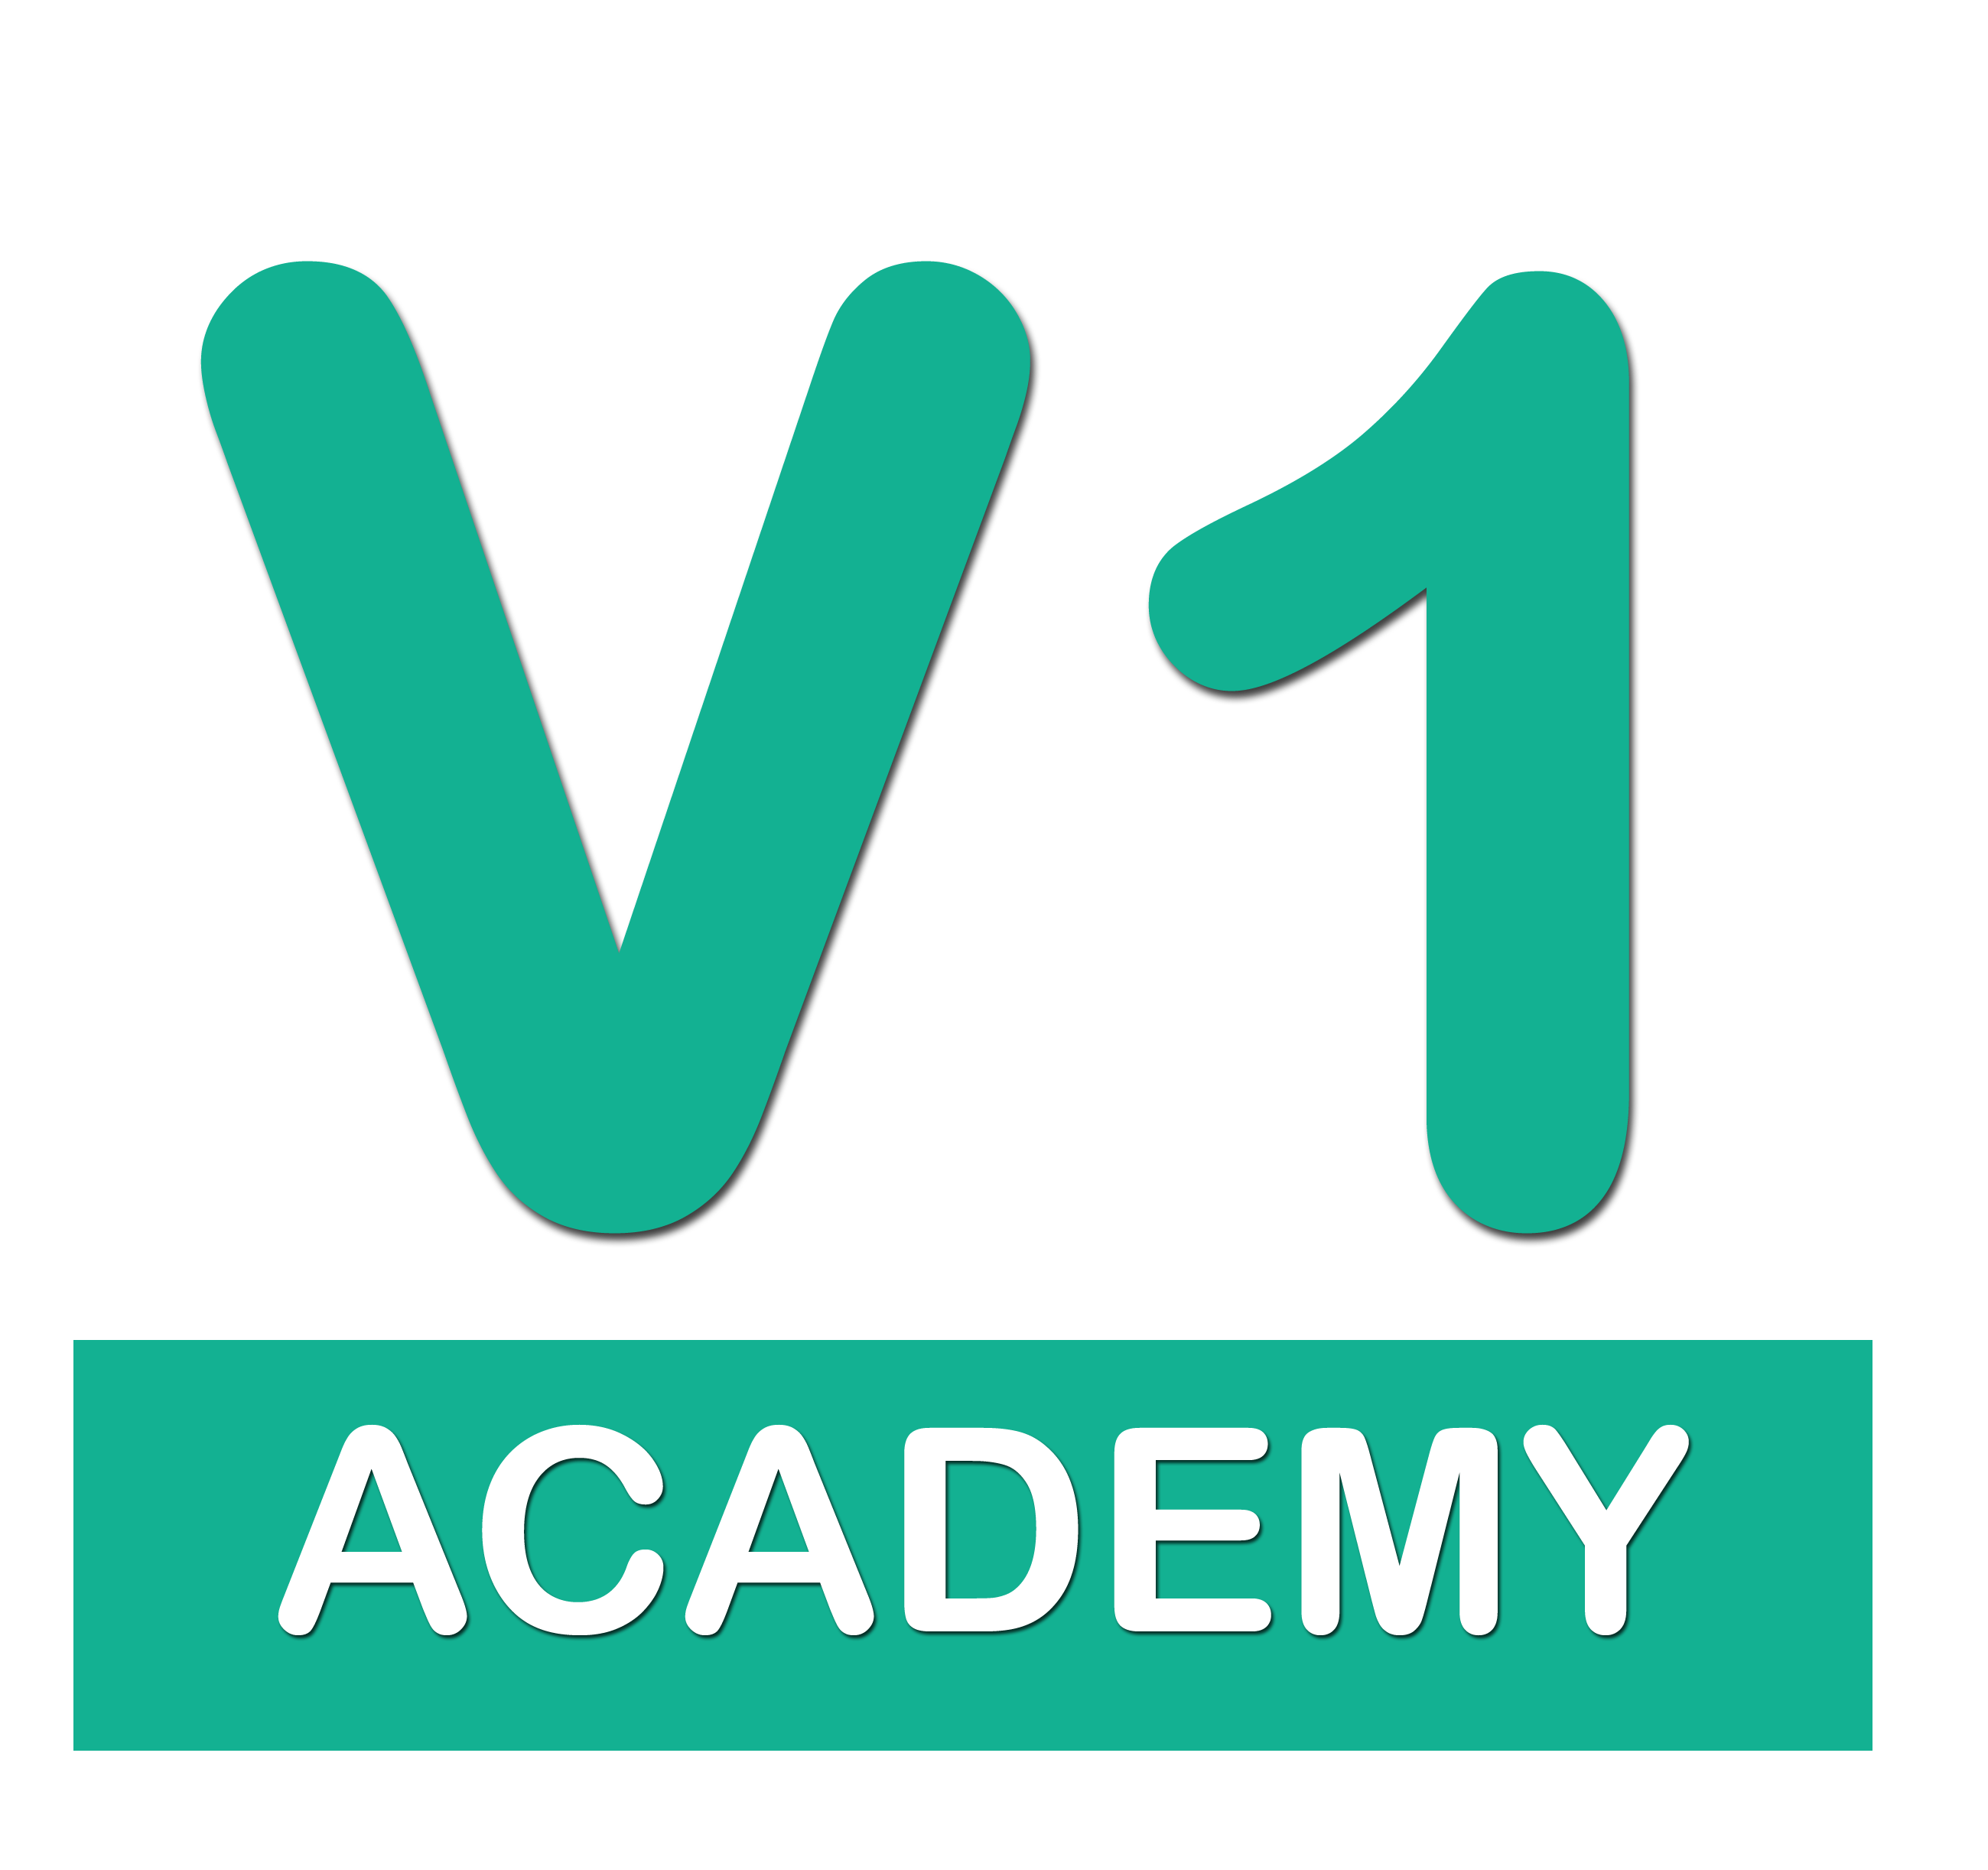 V1 Academy